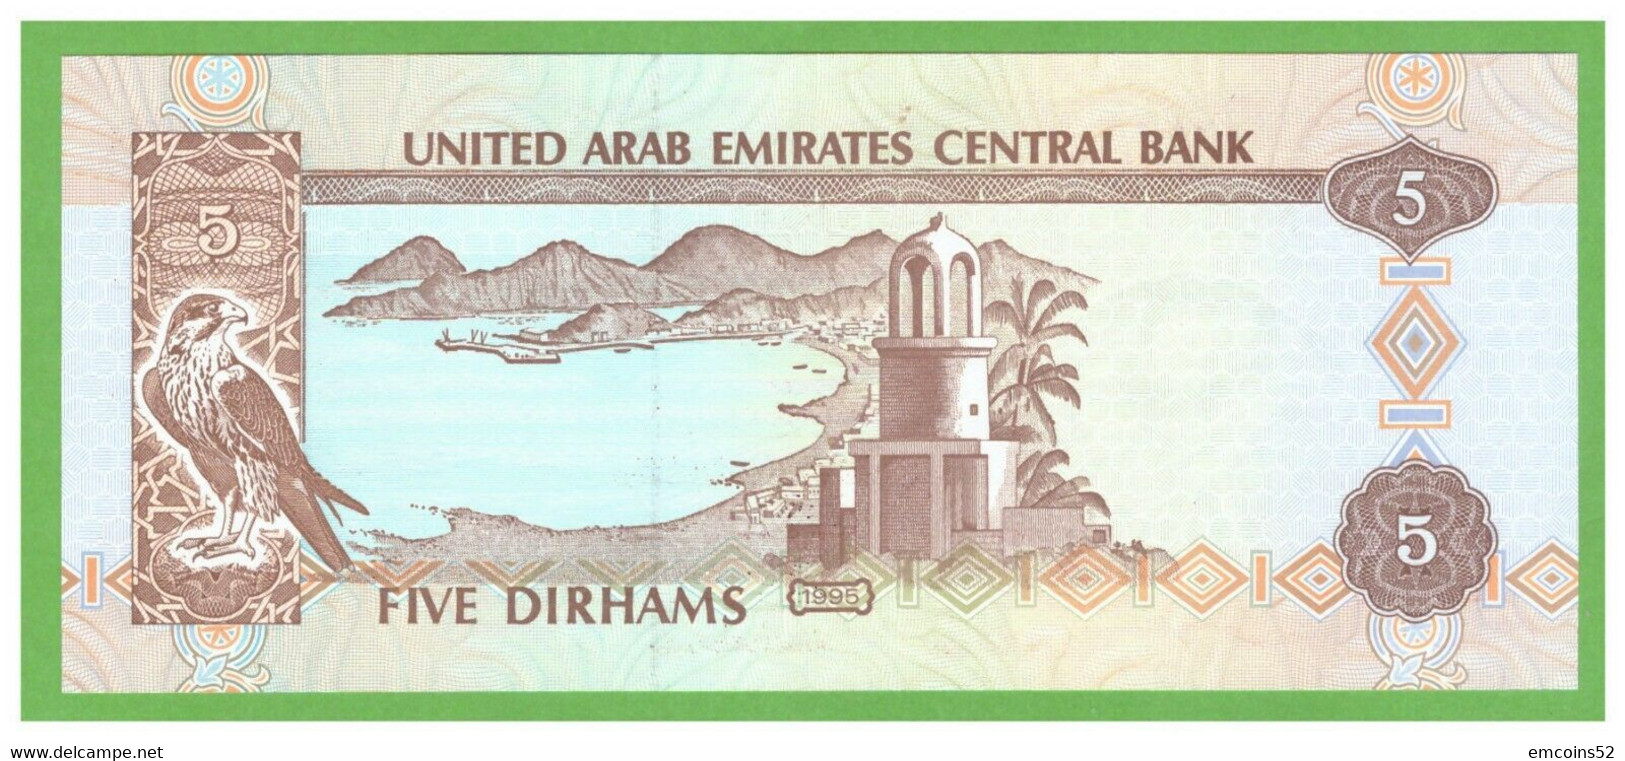 UNITED ARAB EMIRATES 5 DIRHAMS 1995  P-12b  UNC - Verenigde Arabische Emiraten